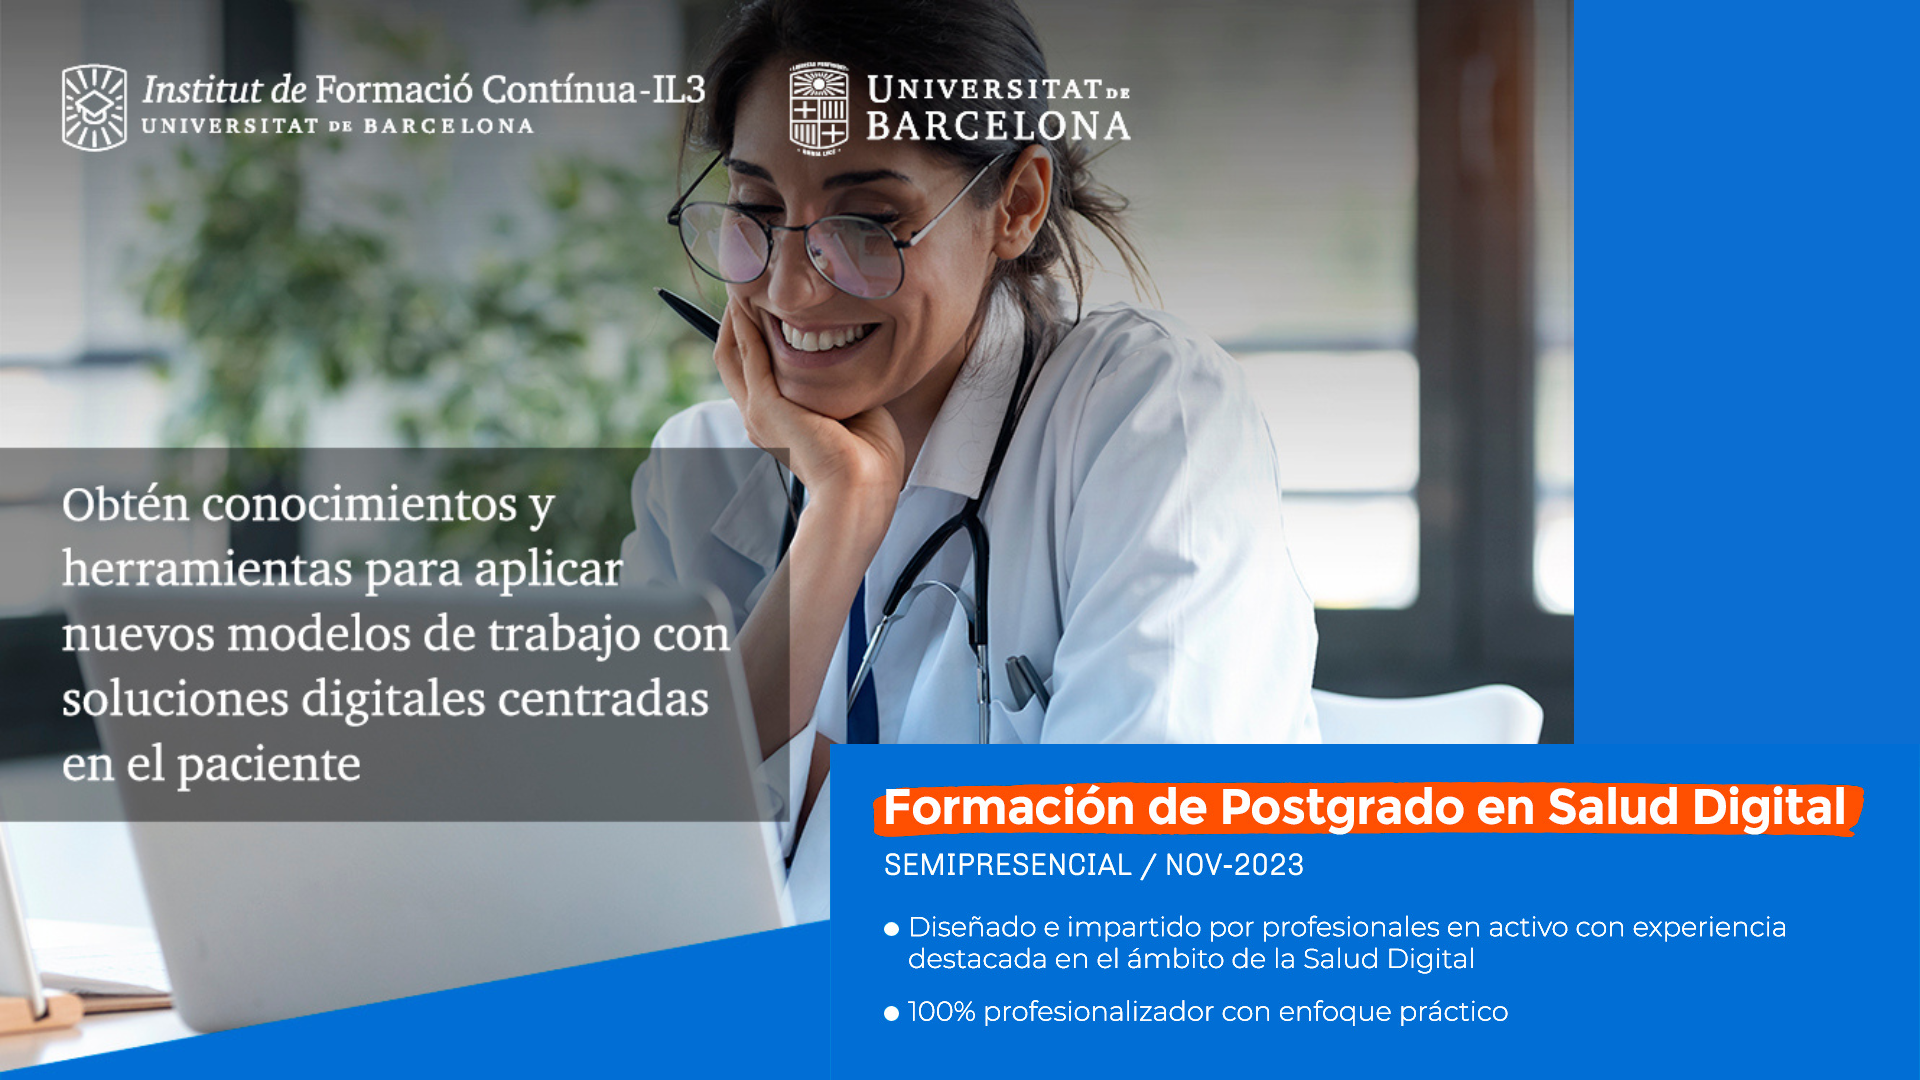 Institut de Formació Continua of the Universitat de Barcelona and BHH renew agreement to offer a 10% discount of Postgraduate in Digital Health – #BHHMembersInitiatives